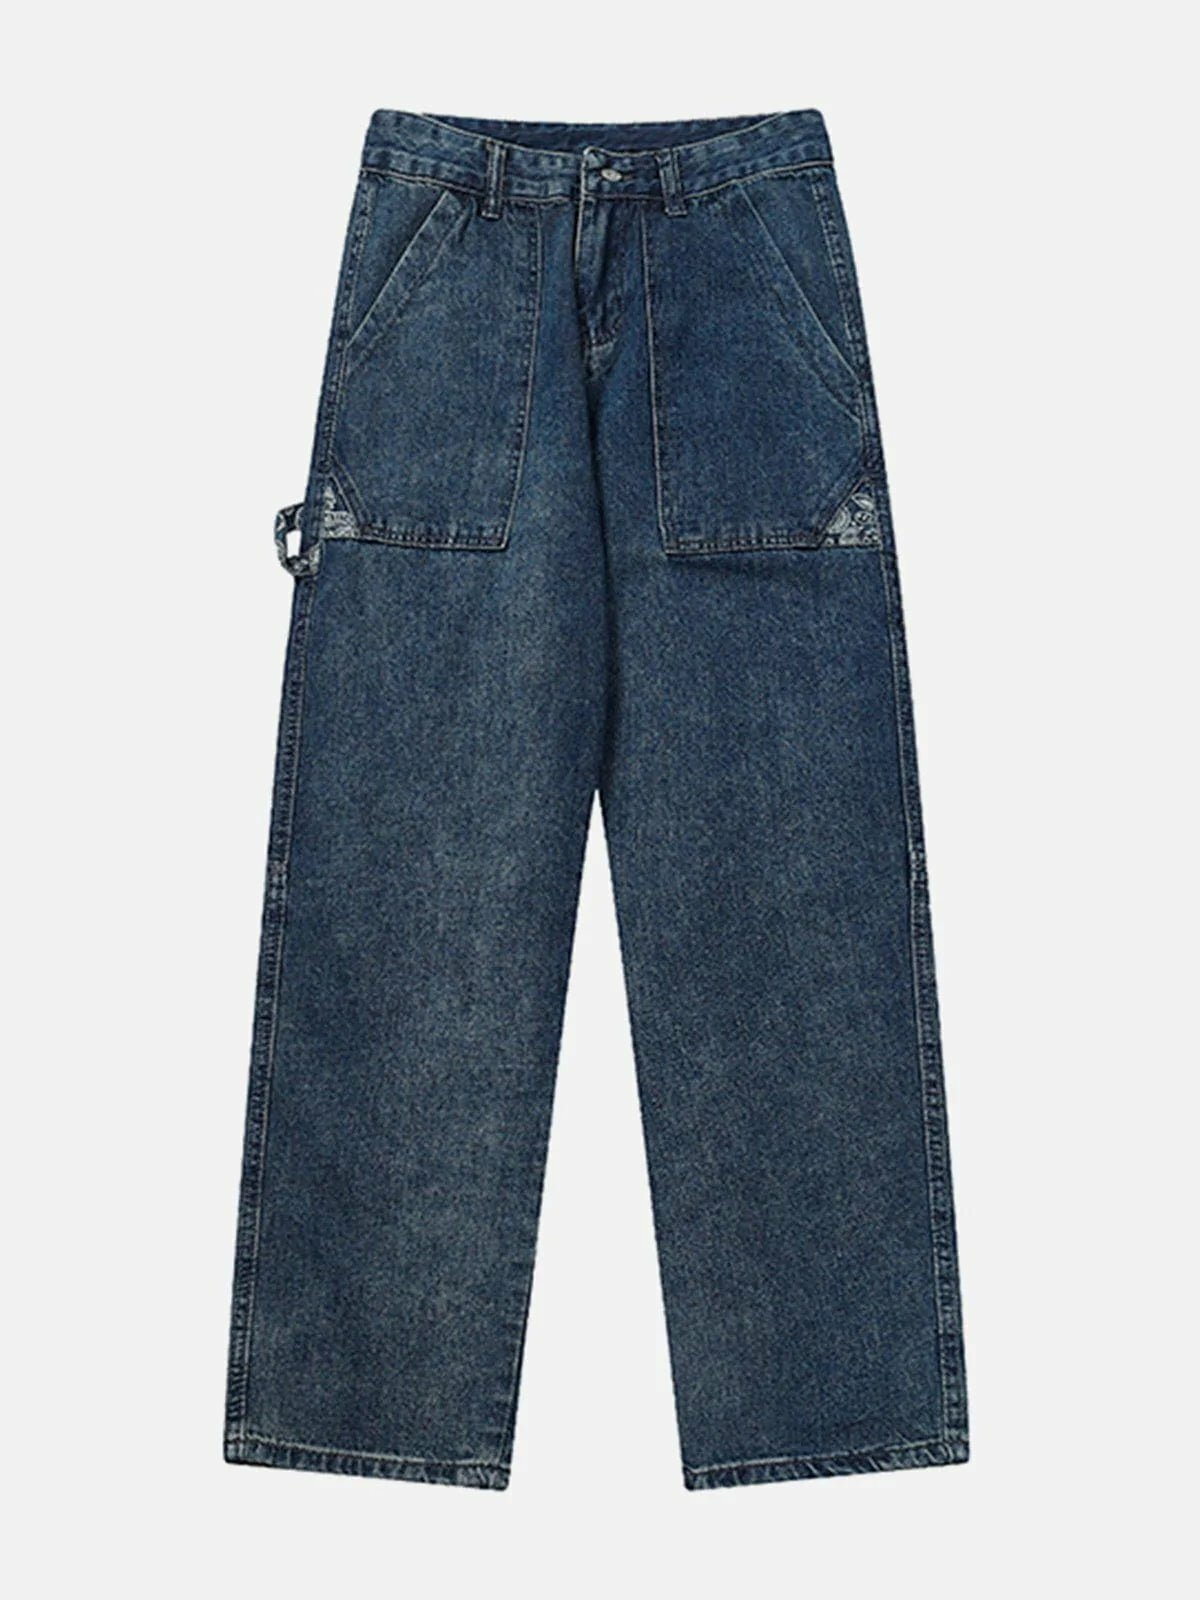 patchwork denim jeans edgy streetwear essential 1494